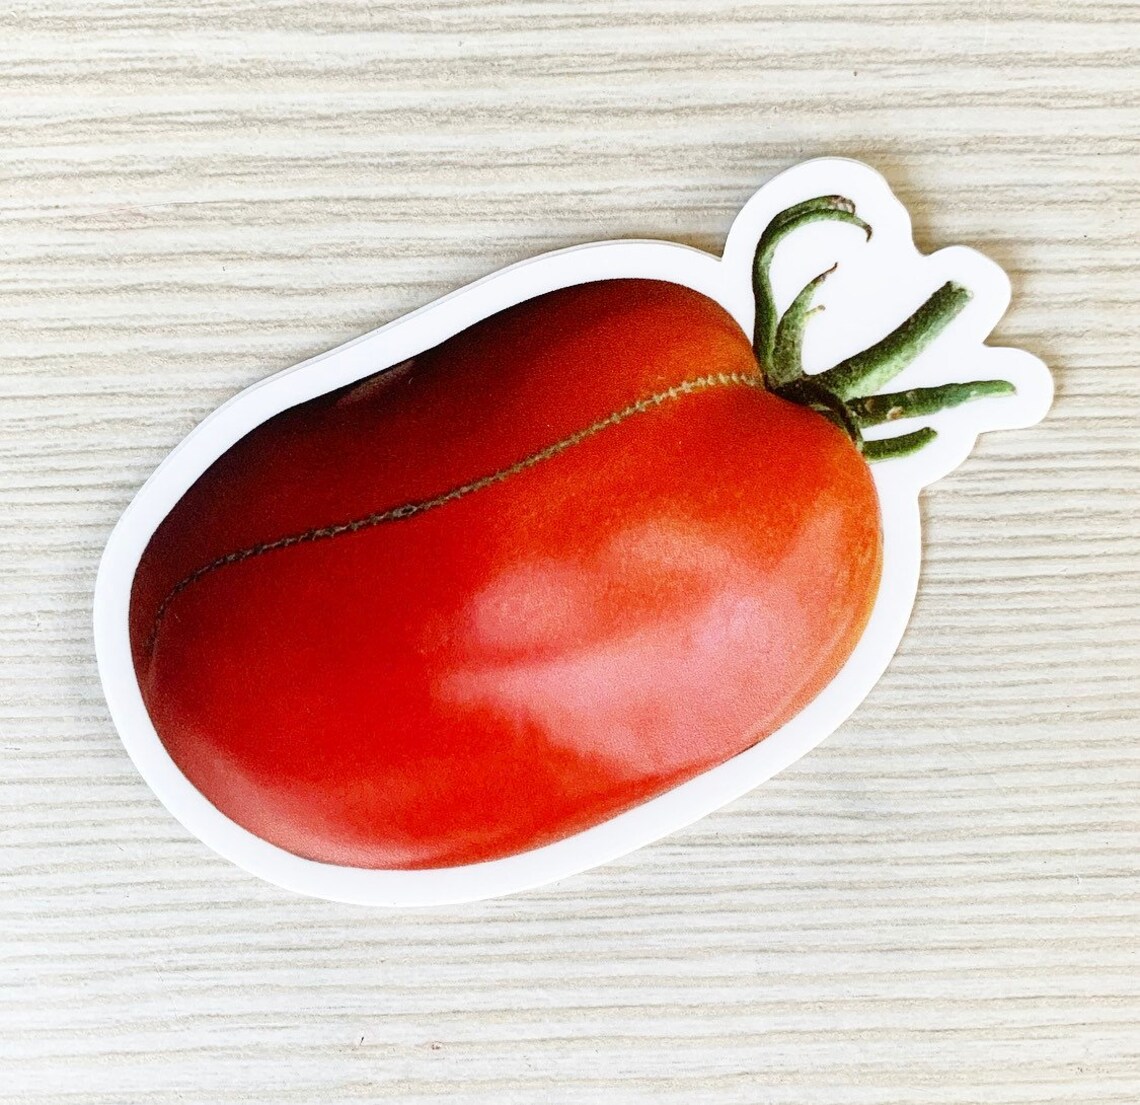 Vinyl Tomato Sticker. Inciardi Paste Tomato Sticker. - Etsy